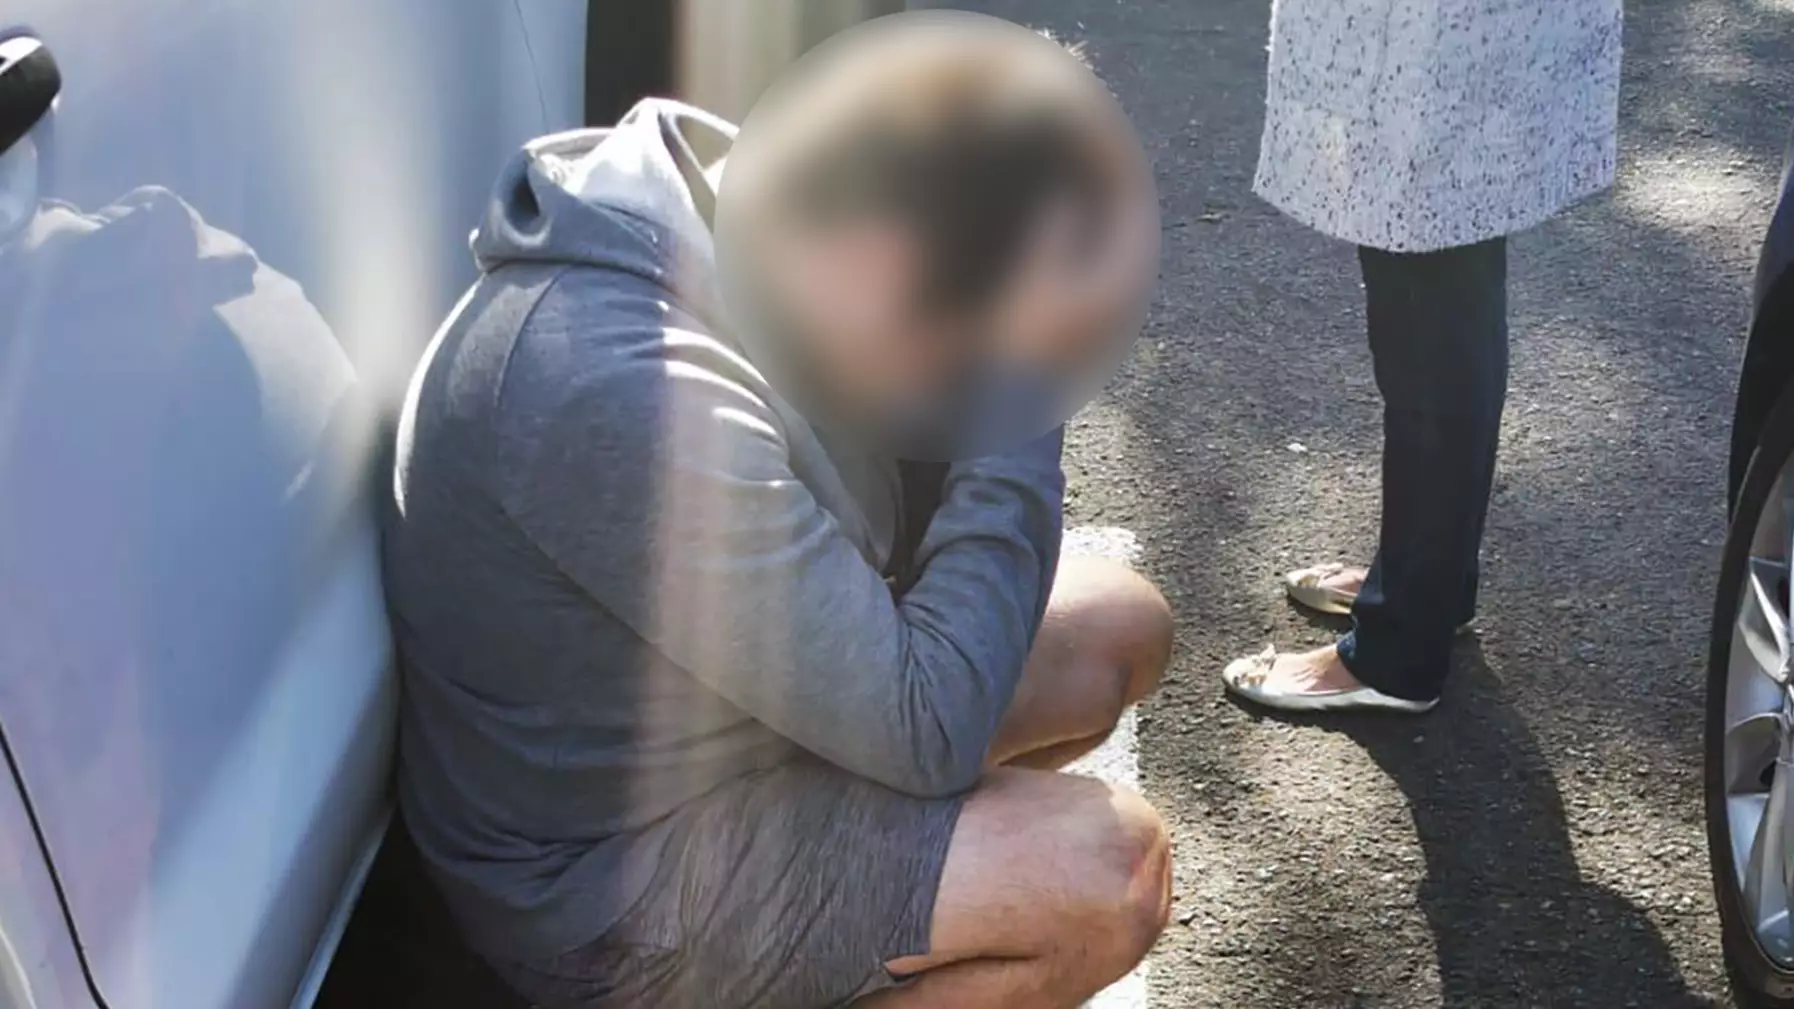 Police Rescue 46 Australian Children After Busting Massive Alleged Global Pedophile Ring